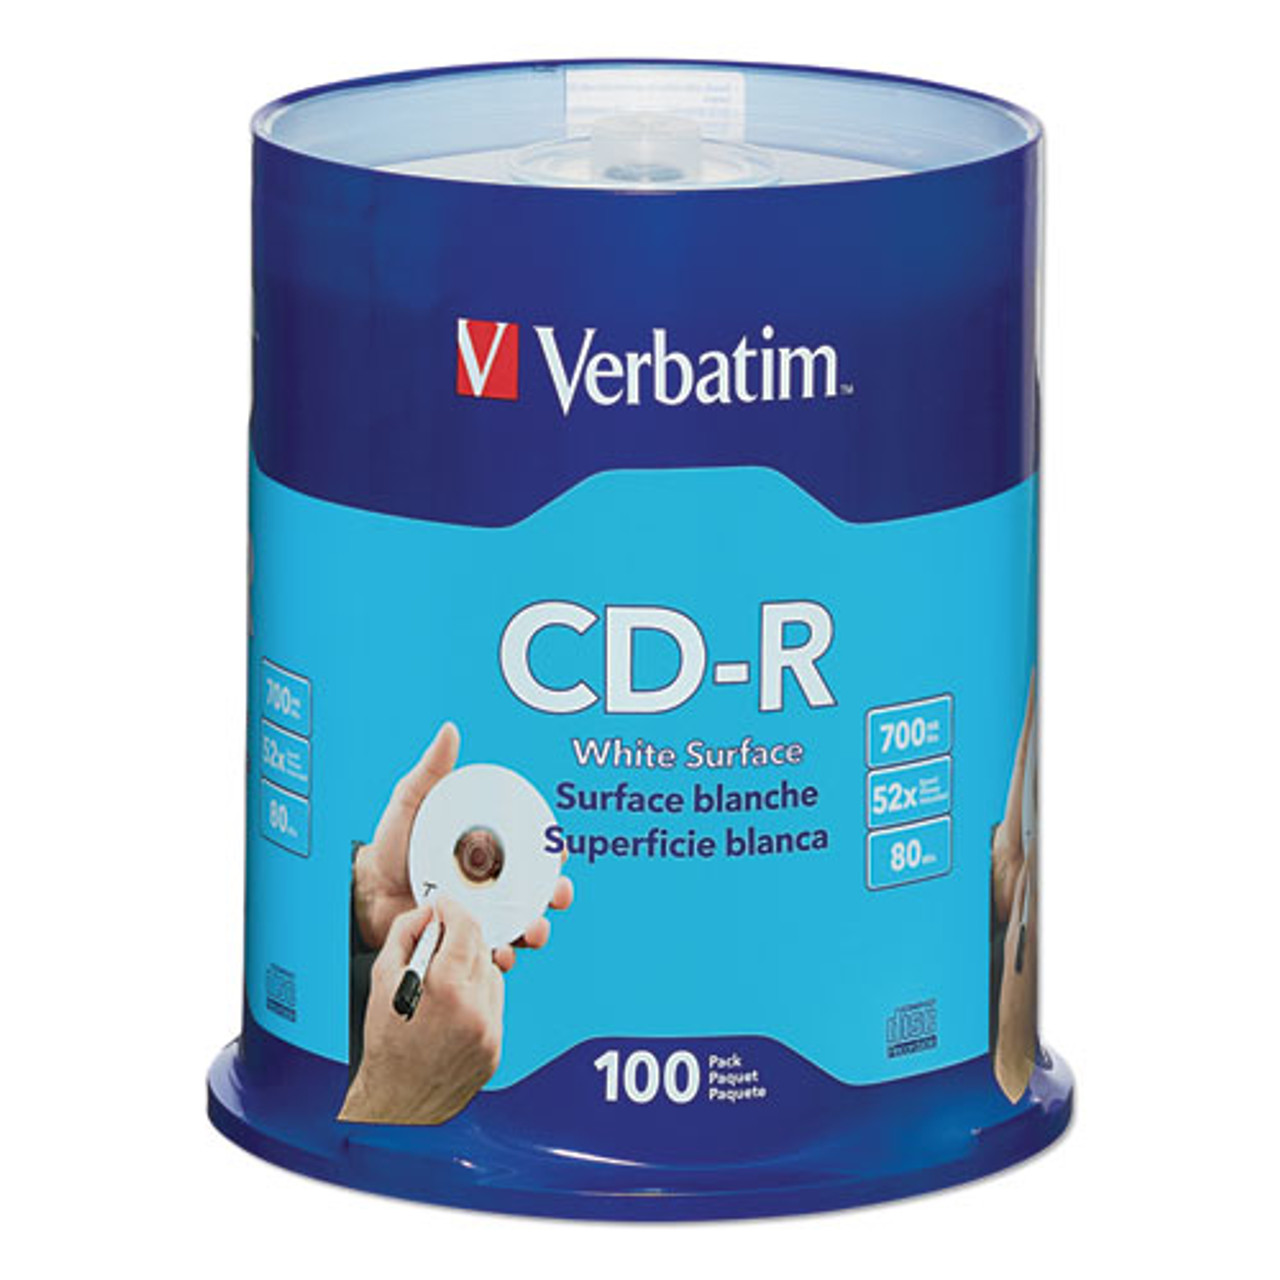 Verbatim CD-R 80min 700MB 52X -100pk, Size: 52 x 80, White